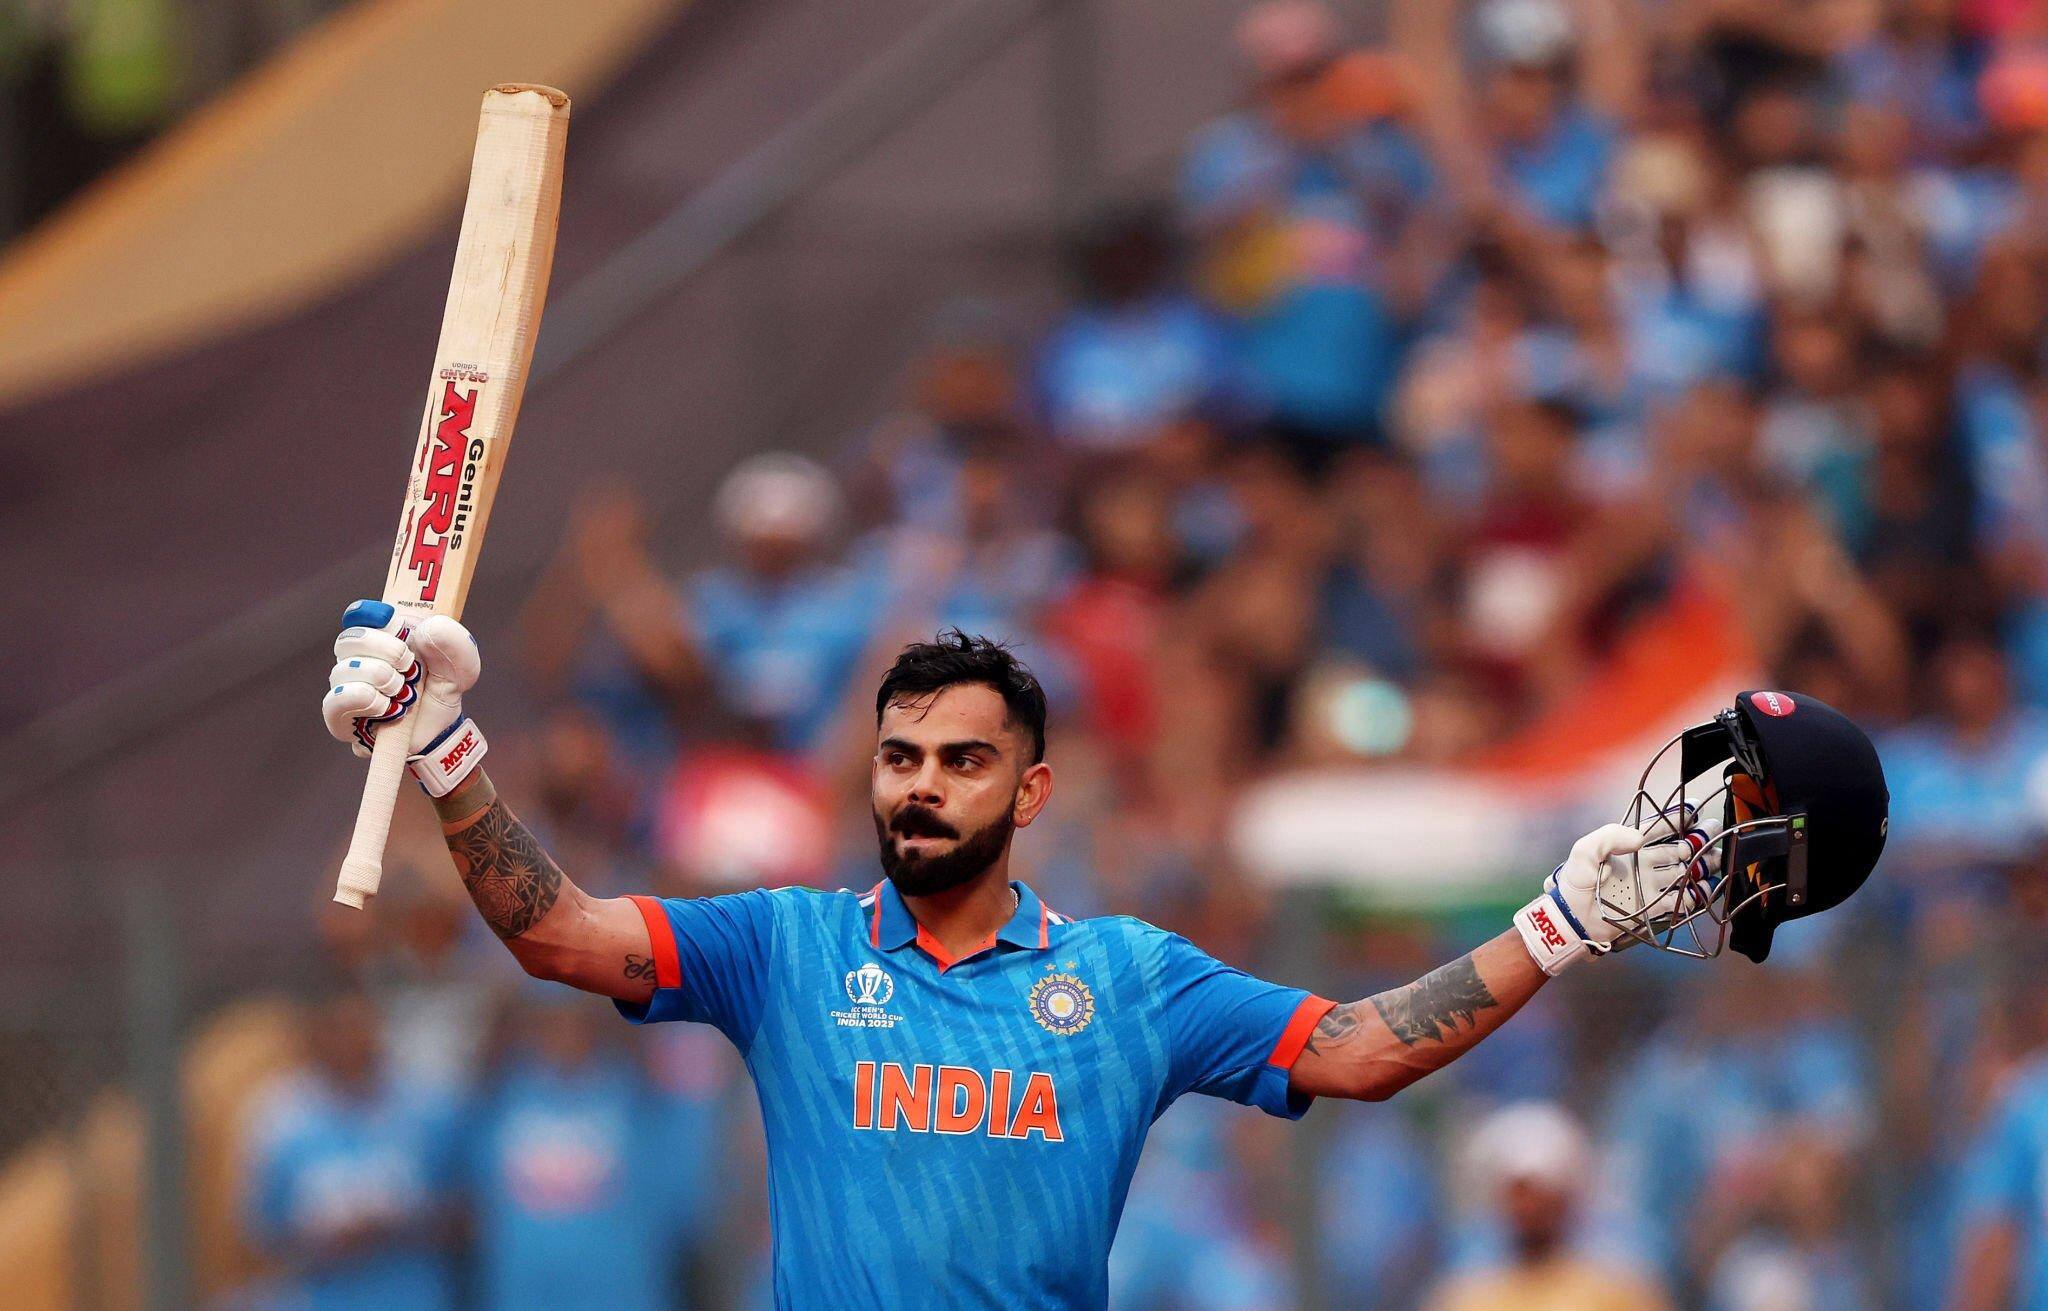 'Still the Biggest Star in the Game' - Former ENG Captain On Virat Kohli's Impact On Cricket